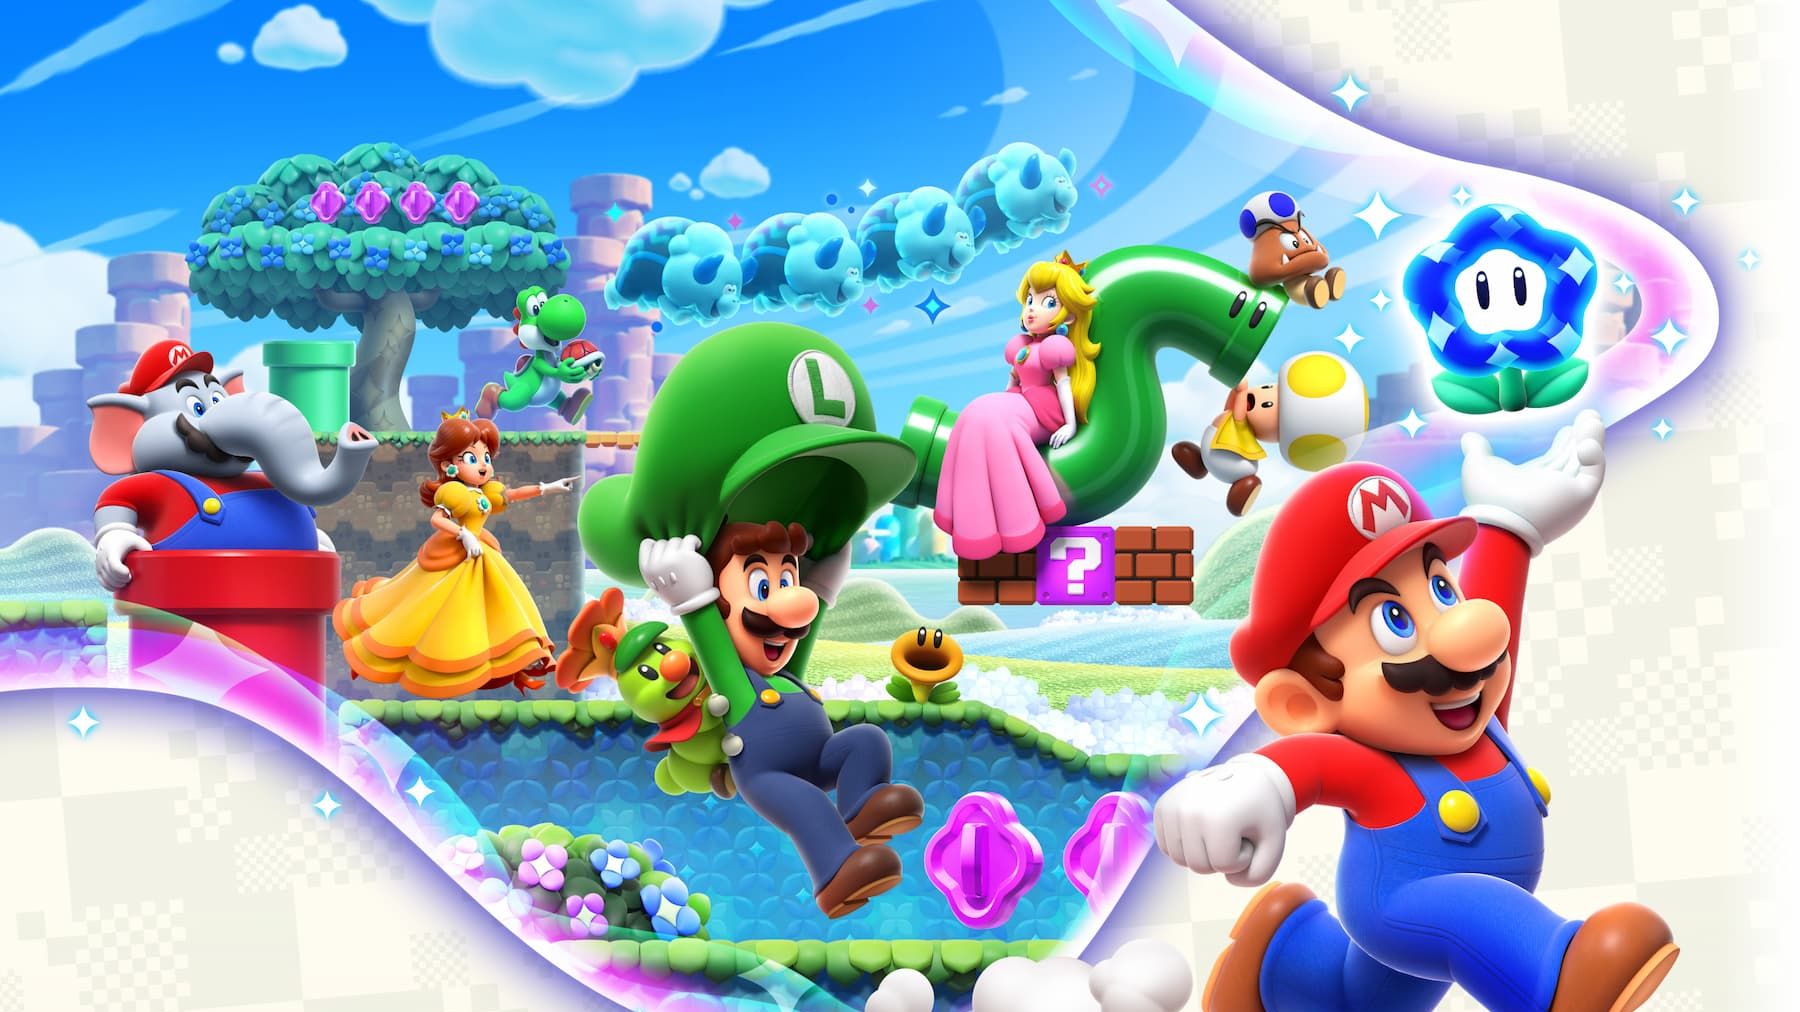 Super Mario Bros Wonder: Release date and best UK pre-order deals